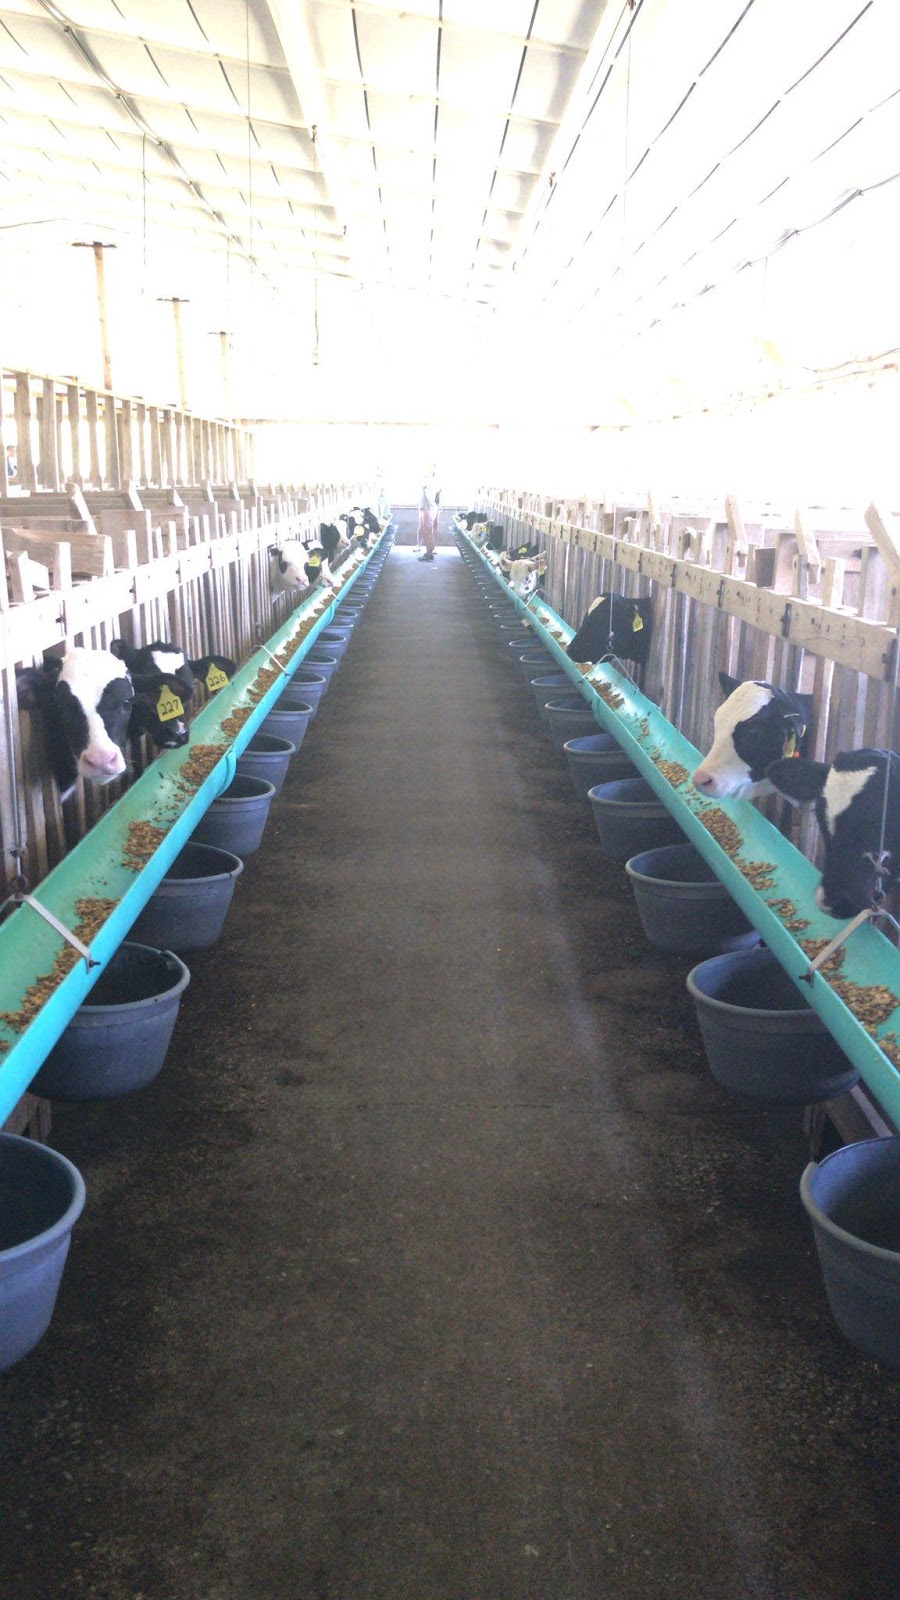 Veal Calves in airy barn